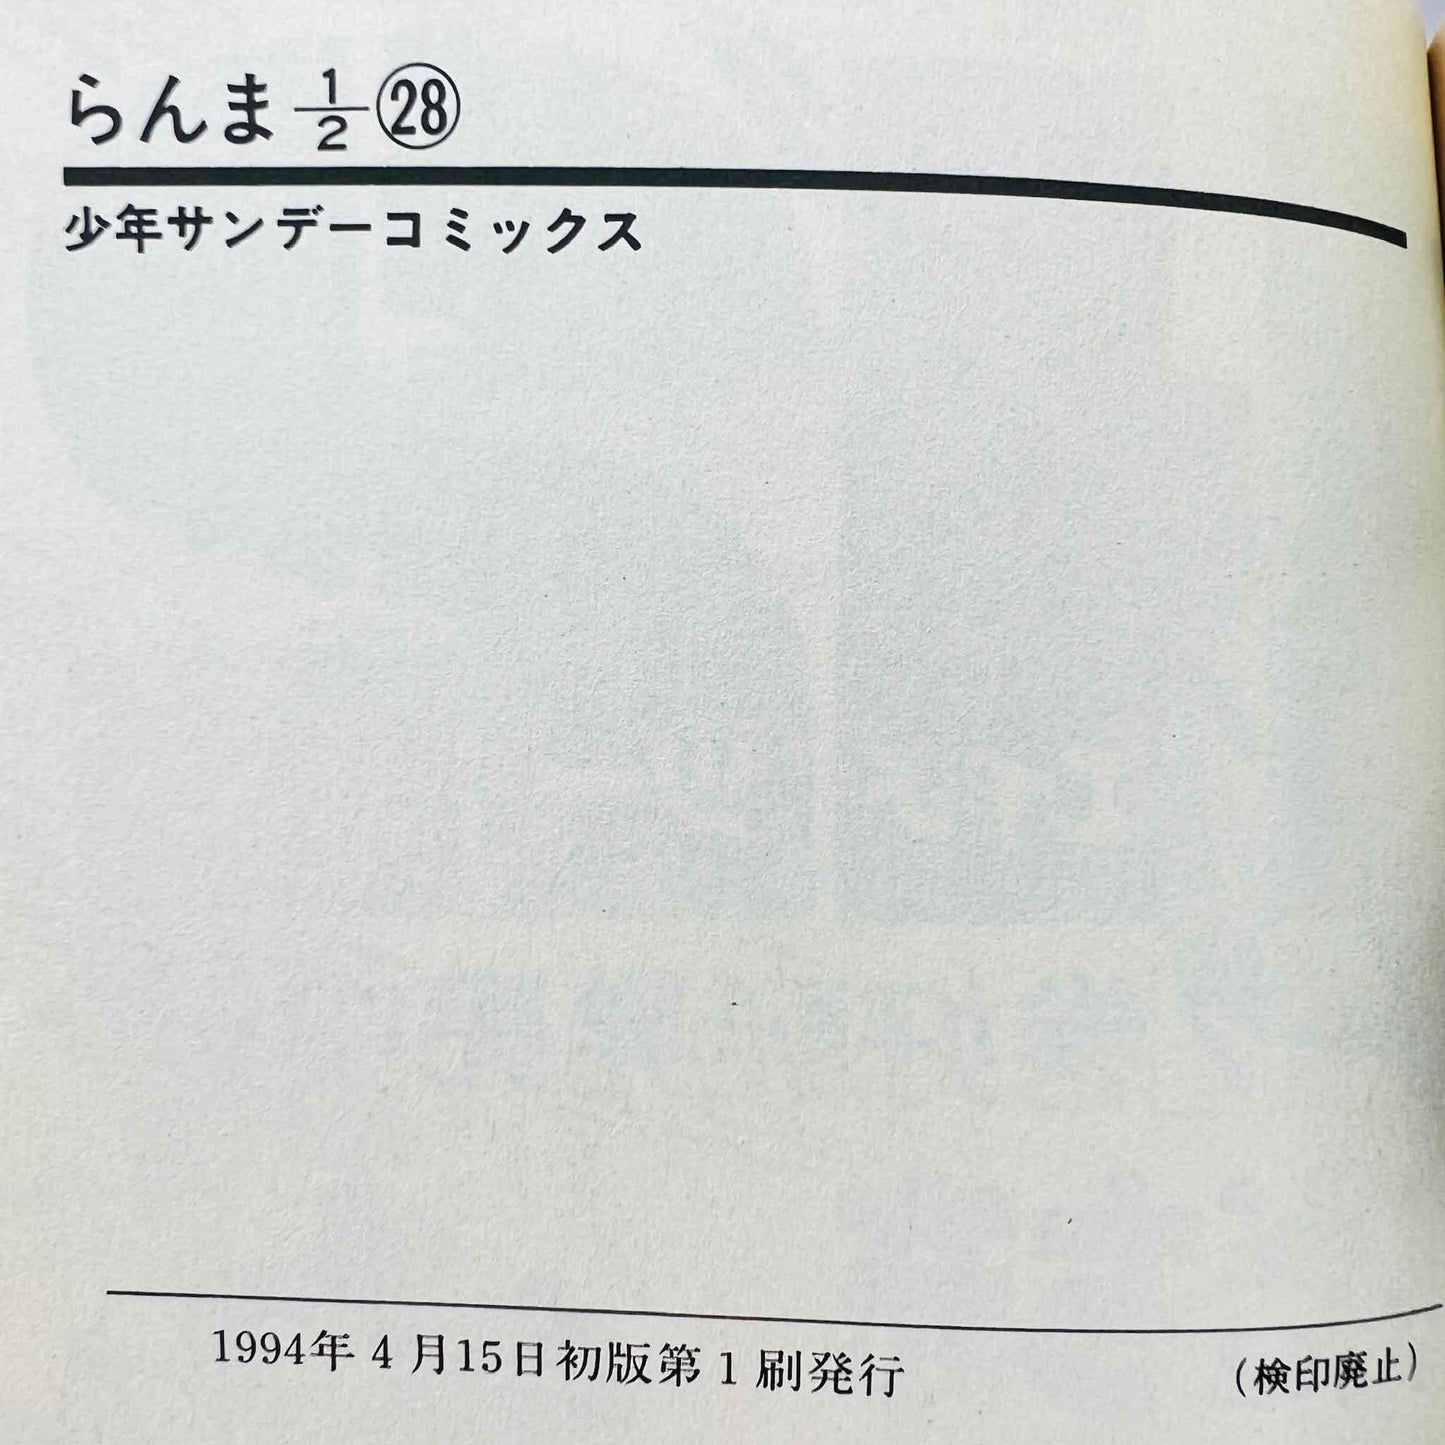 Ranma ½ - Volume 28 - 1stPrint.net - 1st First Print Edition Manga Store - M-RANMA-28-001